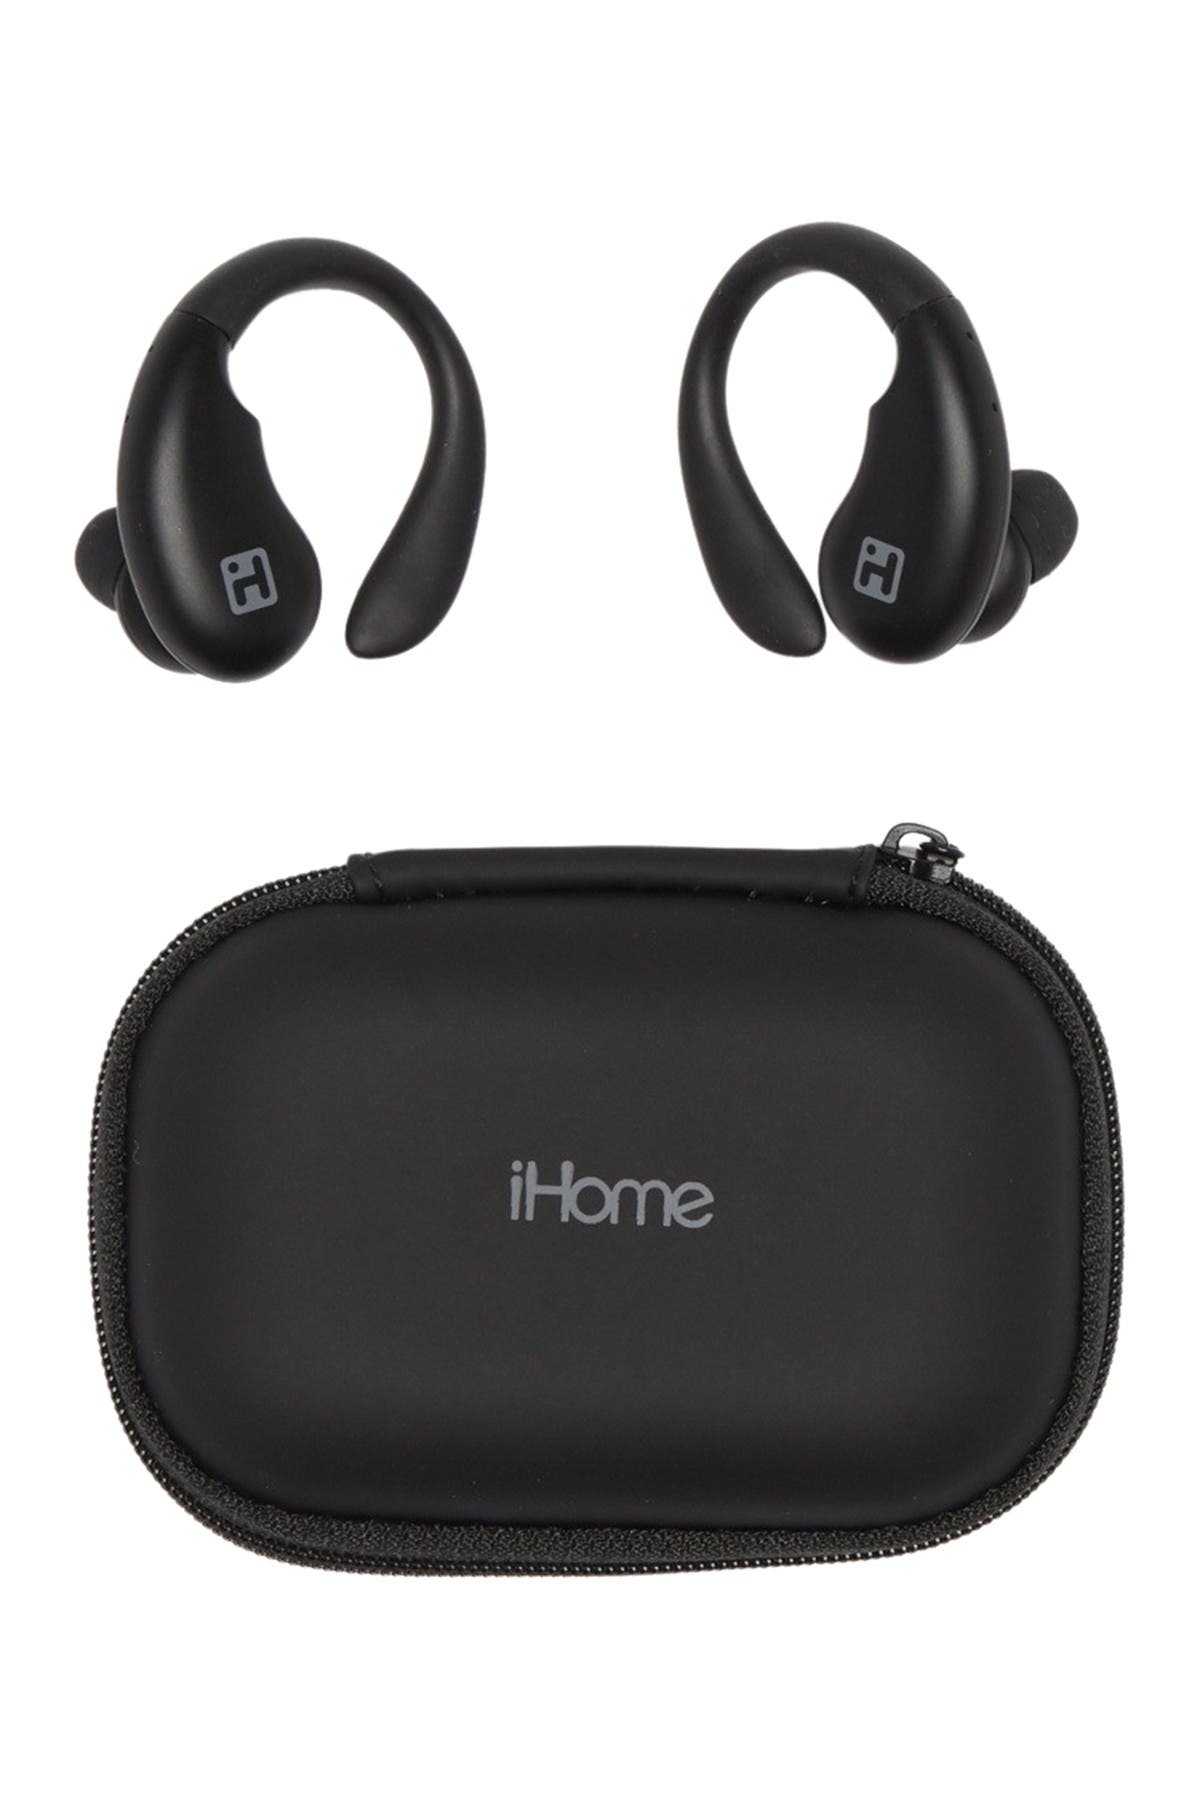 Bytech Black Sport Earbuds & Carrying Case 2-piece Set